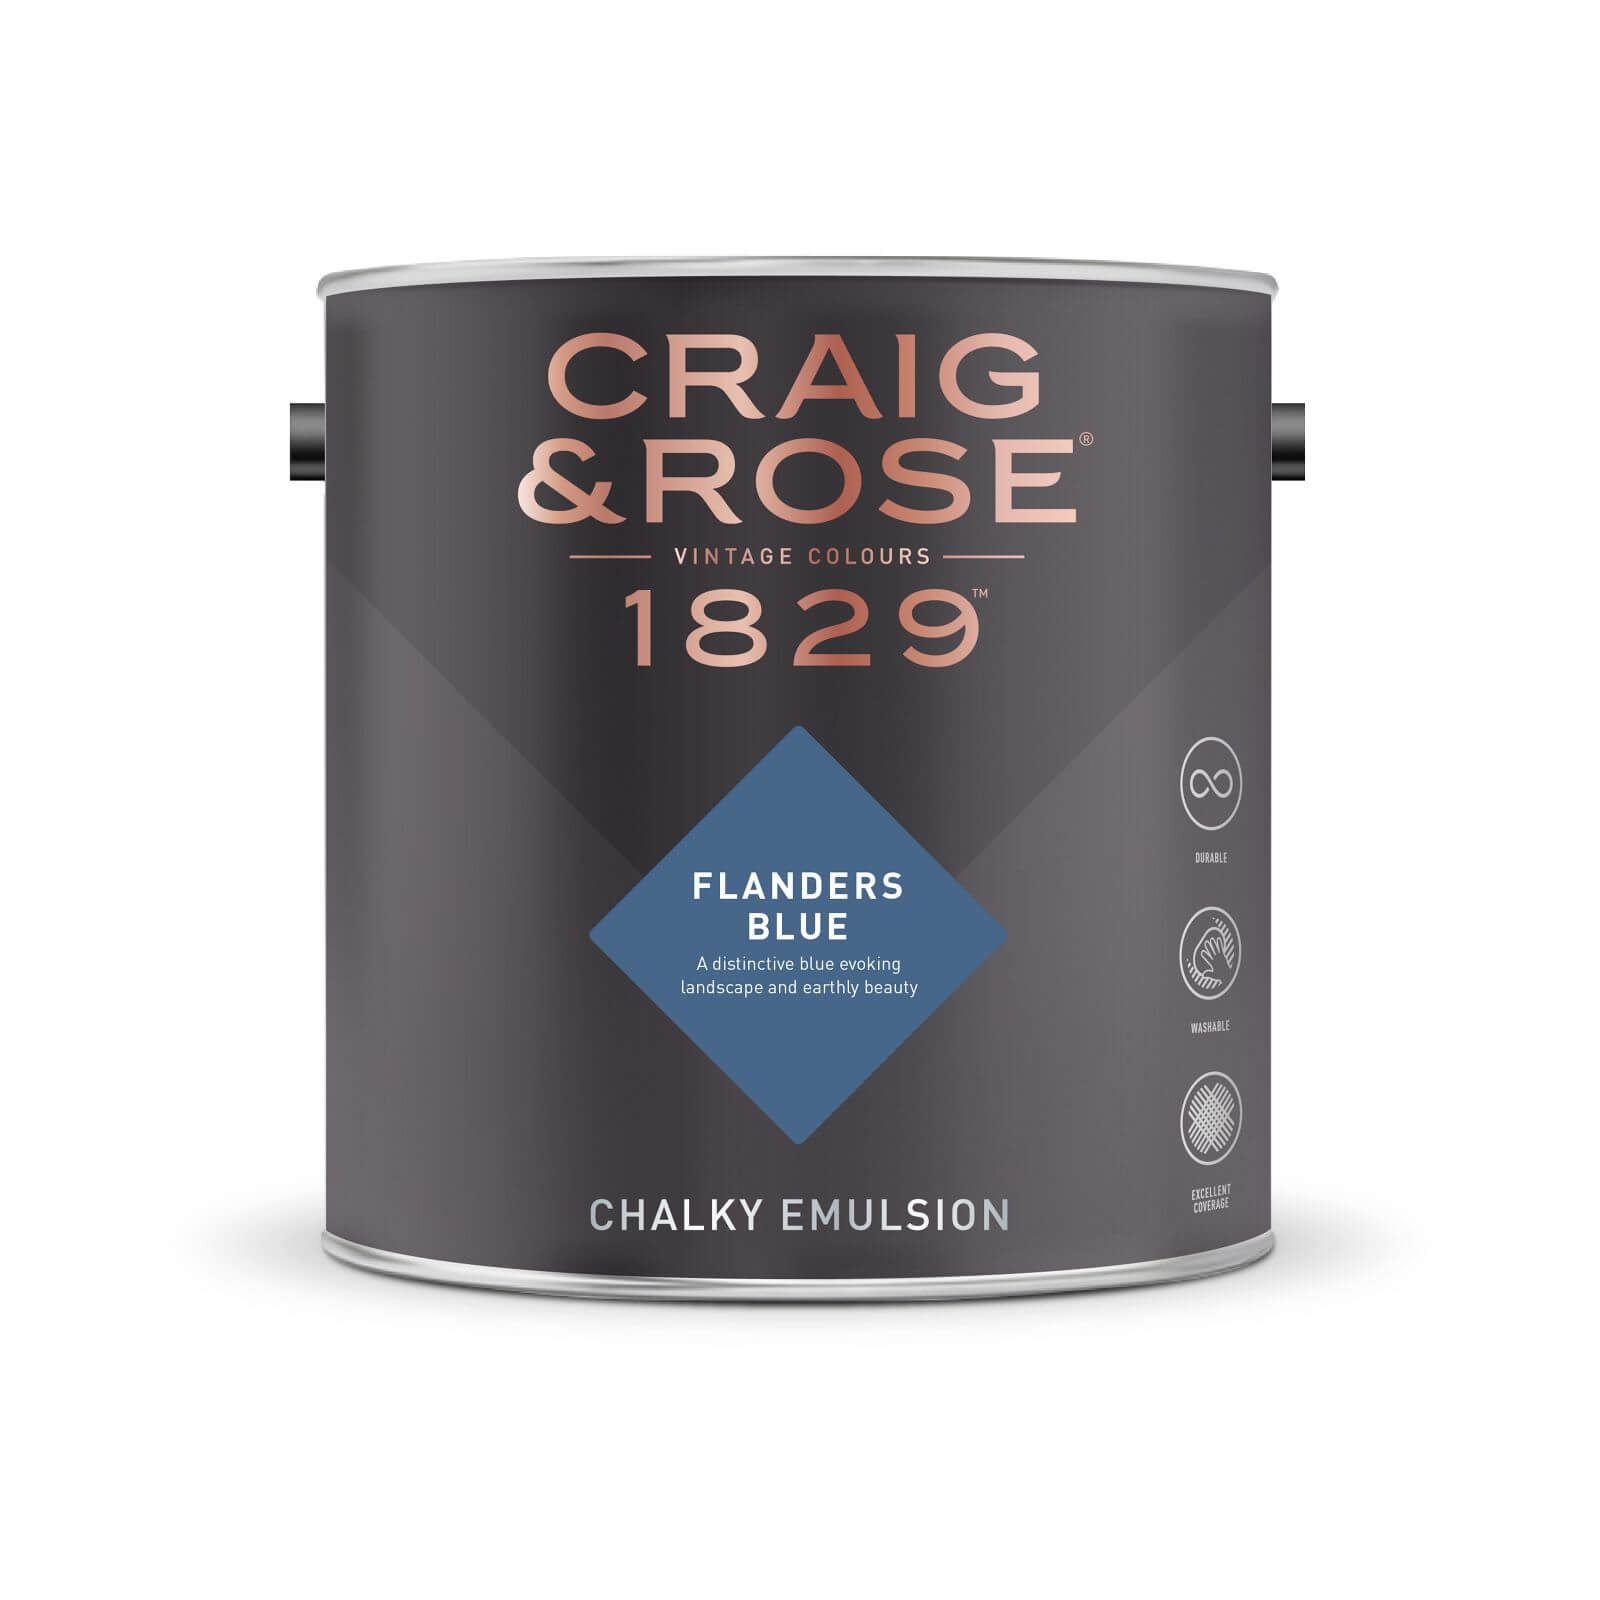 Craig & Rose 1829 Chalky Emulsion Paint Flanders Blue - 5L